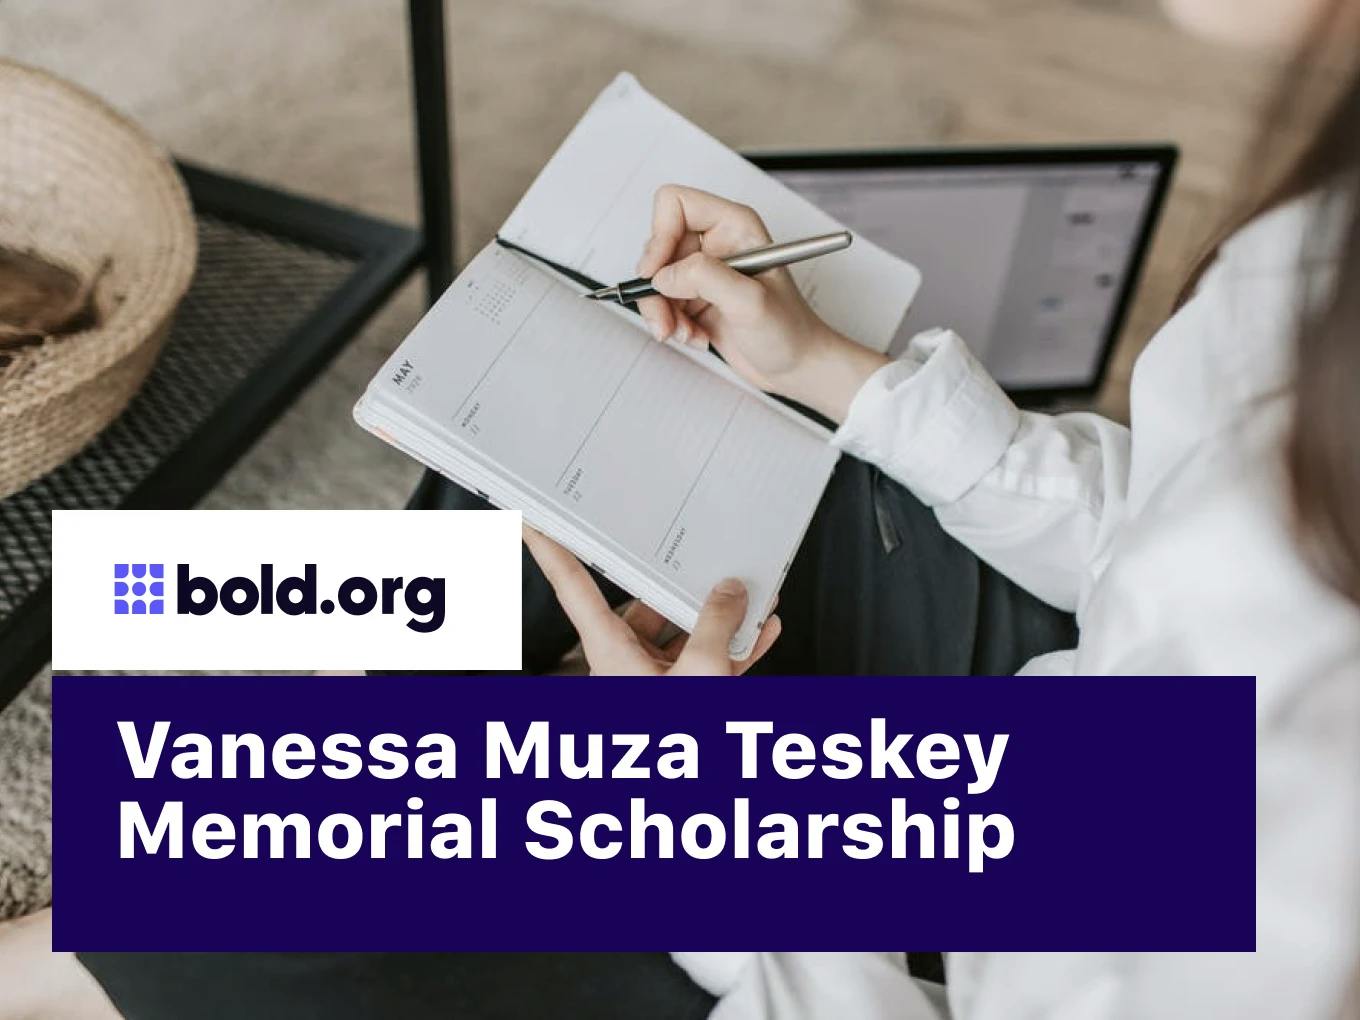 Vanessa Muza Teskey Memorial Scholarship